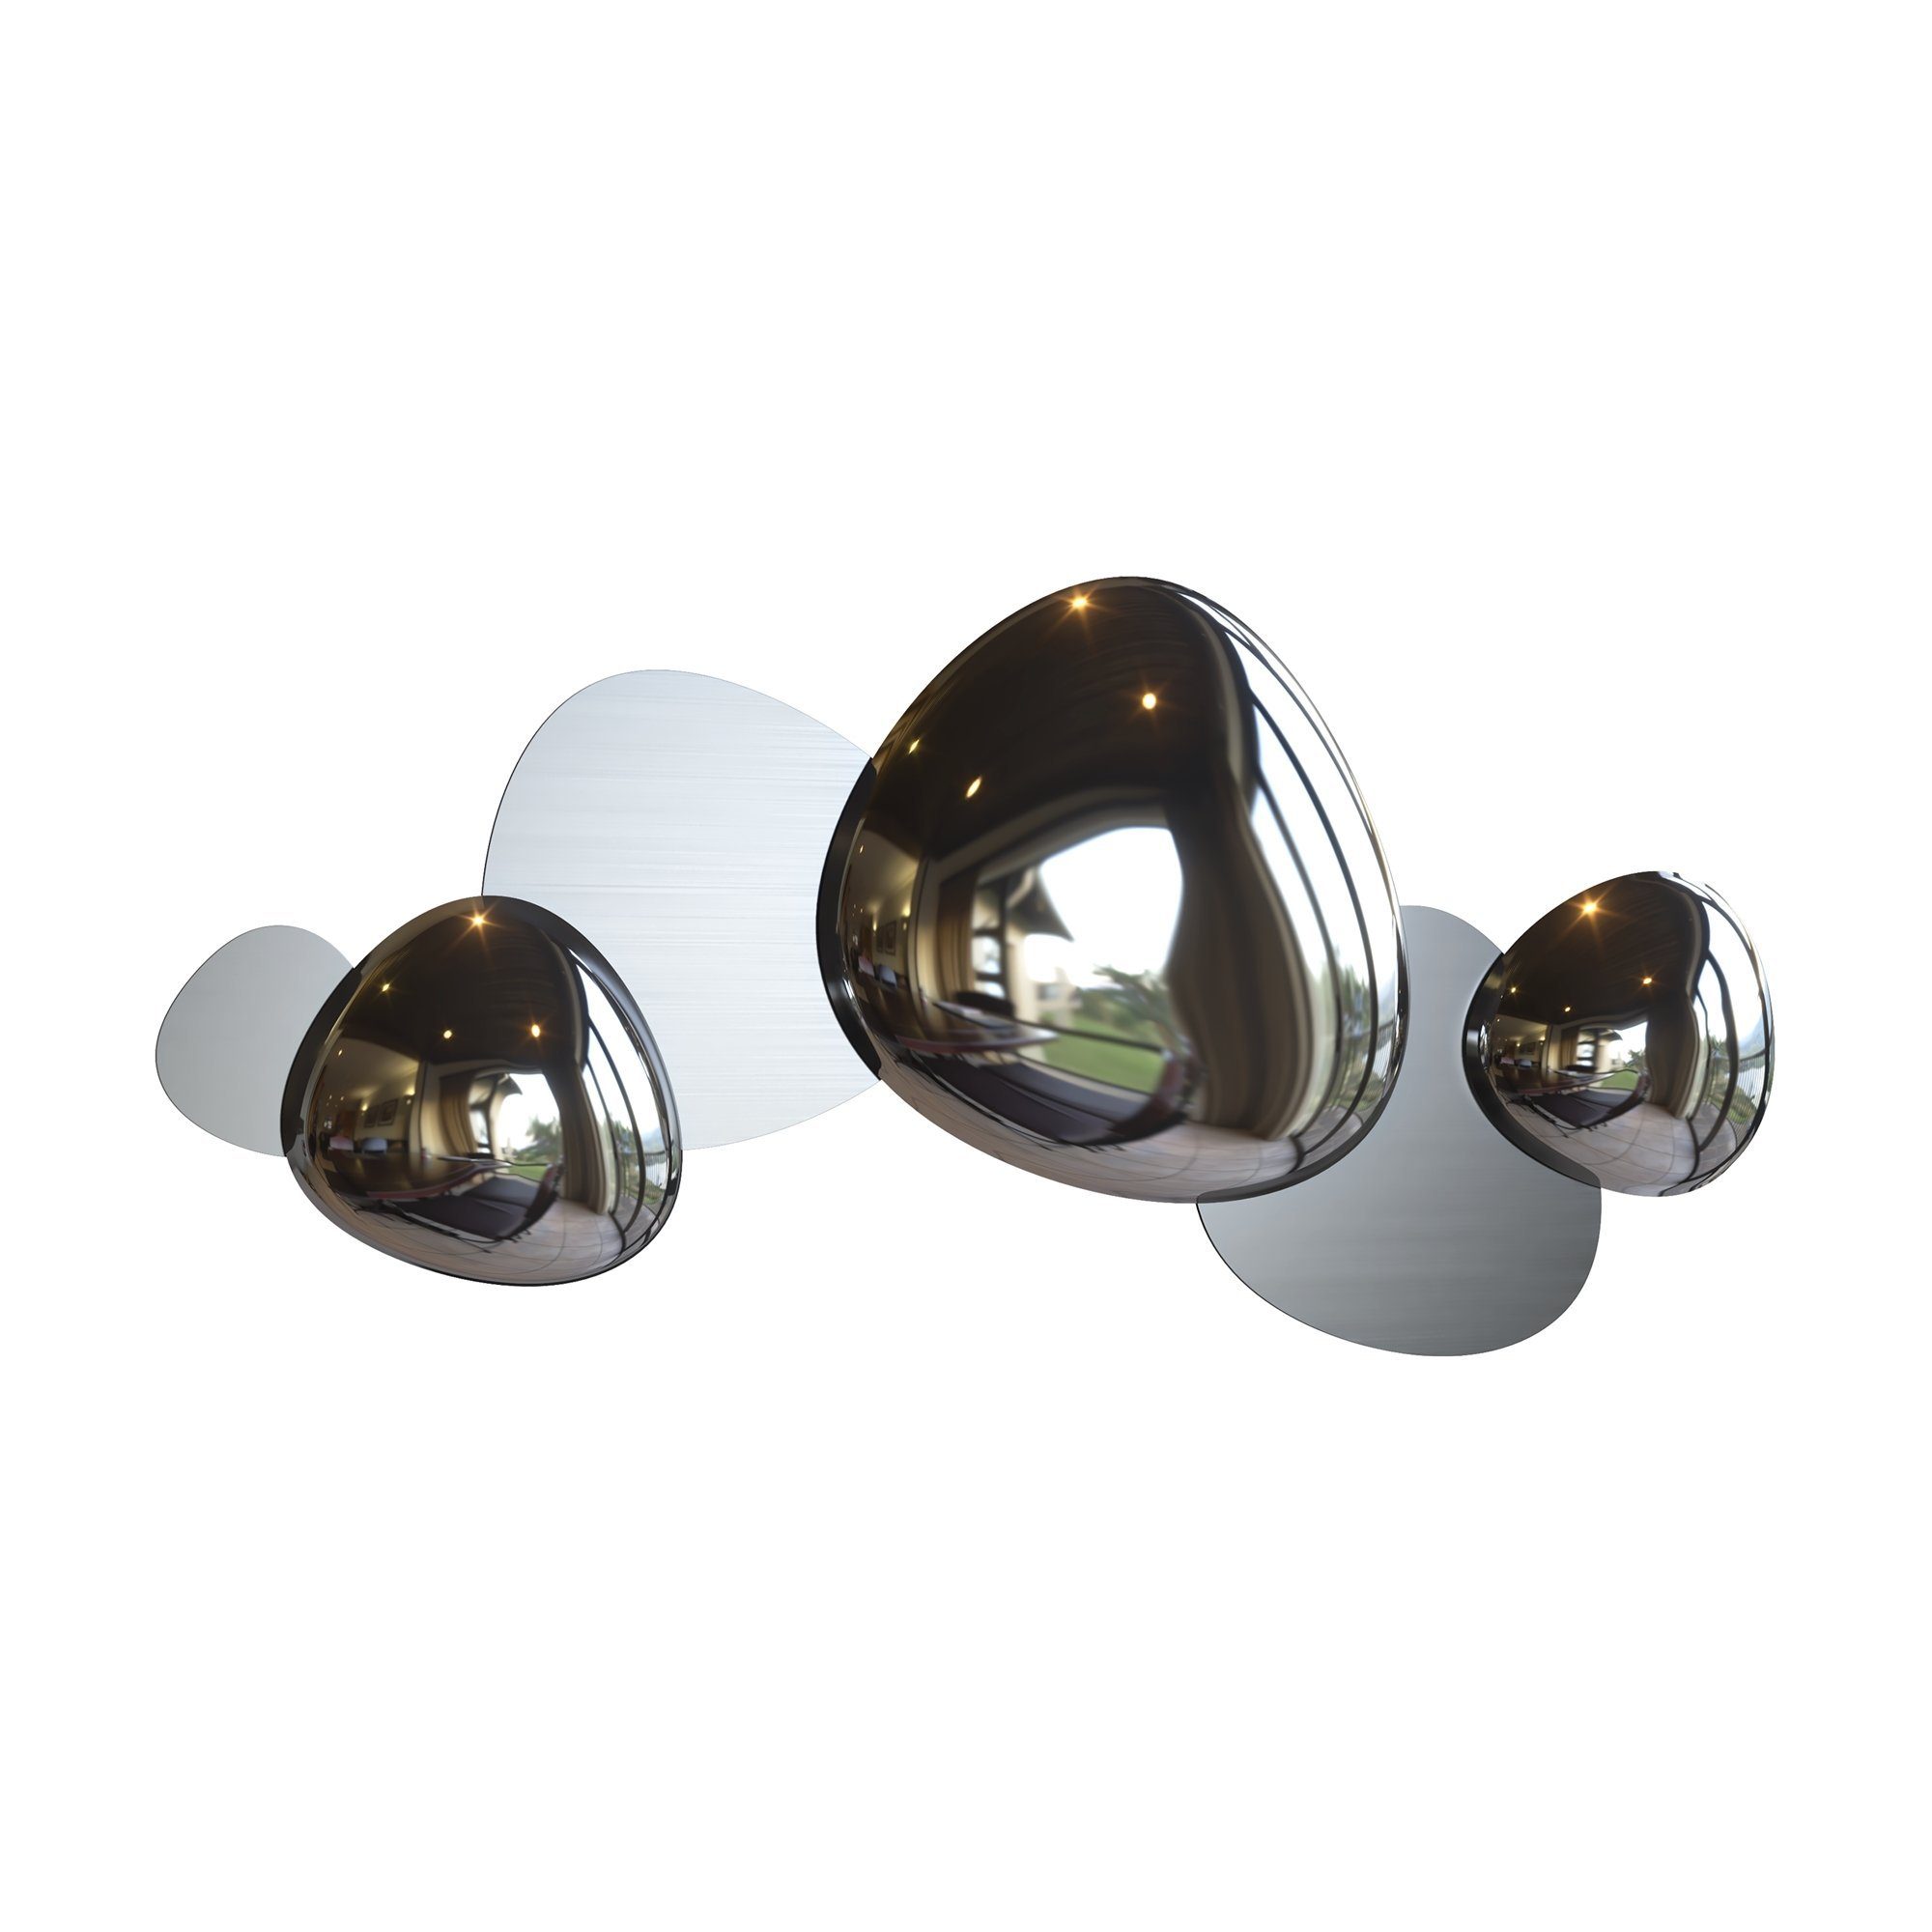 Raumobjekt MAYTONI LIGHTING Jack-stone cm, DECORATIVE Design LED dekoratives fest & Wandleuchte 3 Lampe 79x37.1x7.4 integriert, hochwertige